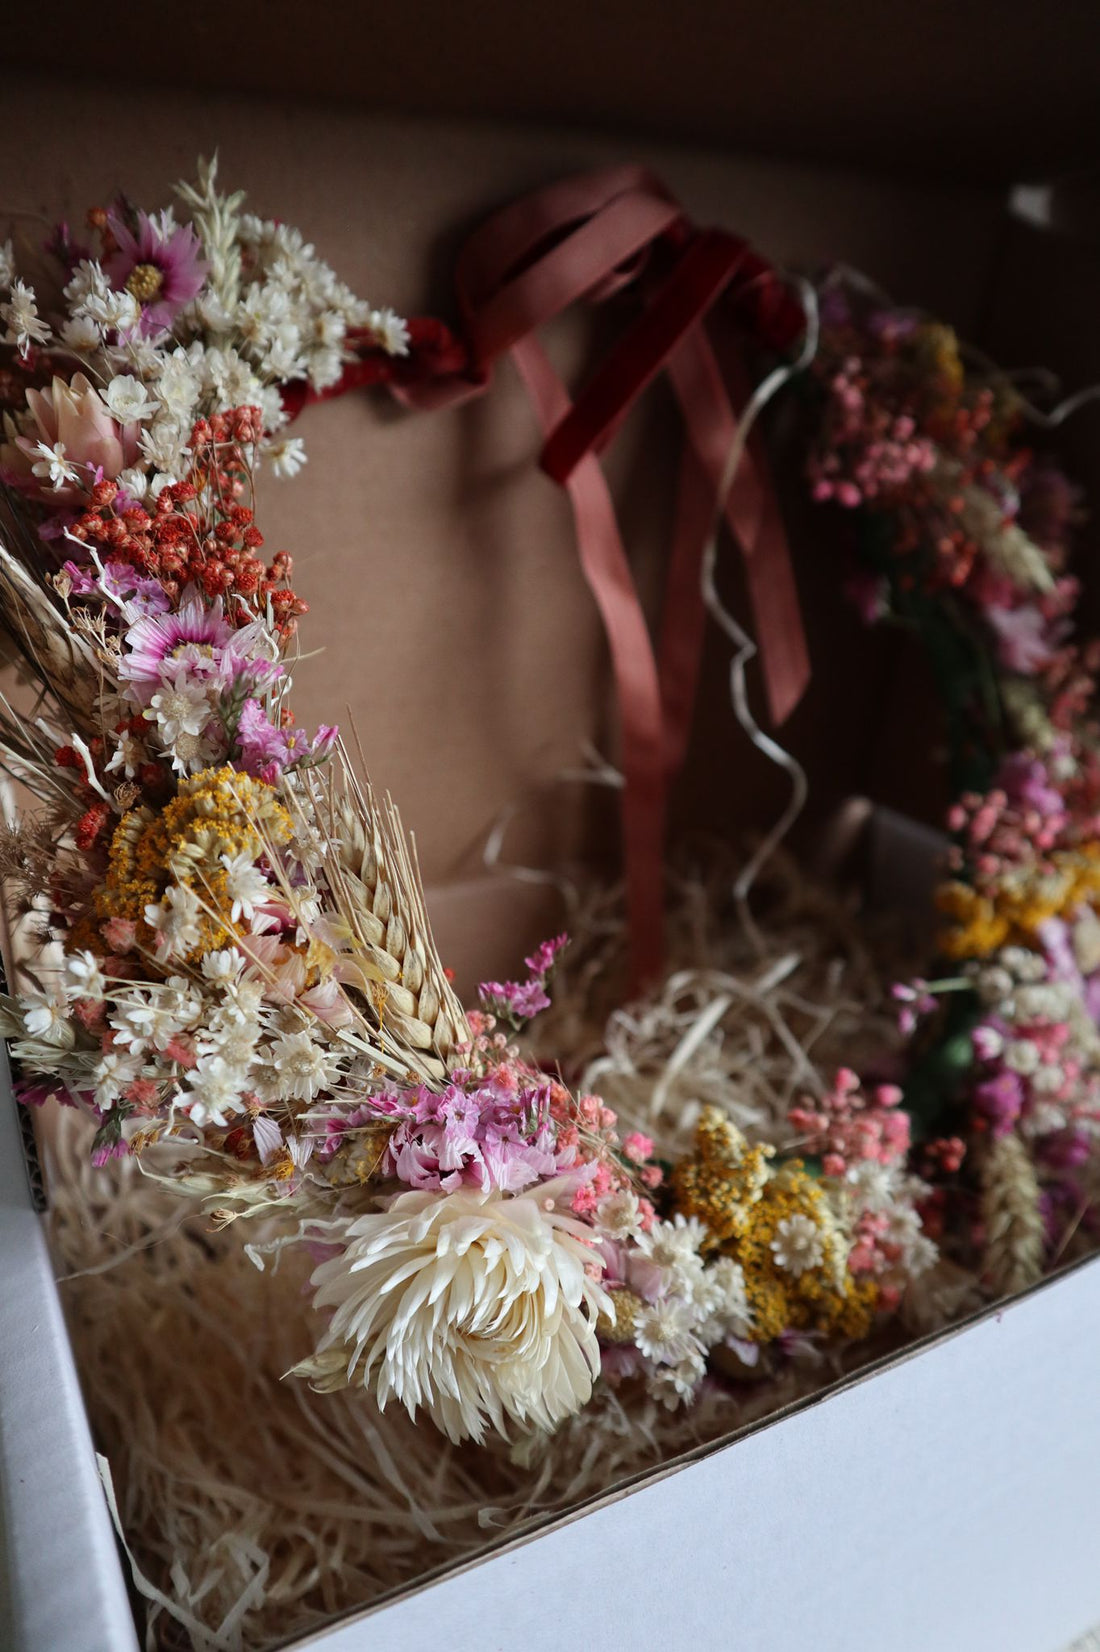 Handmade flower crown in gift box 